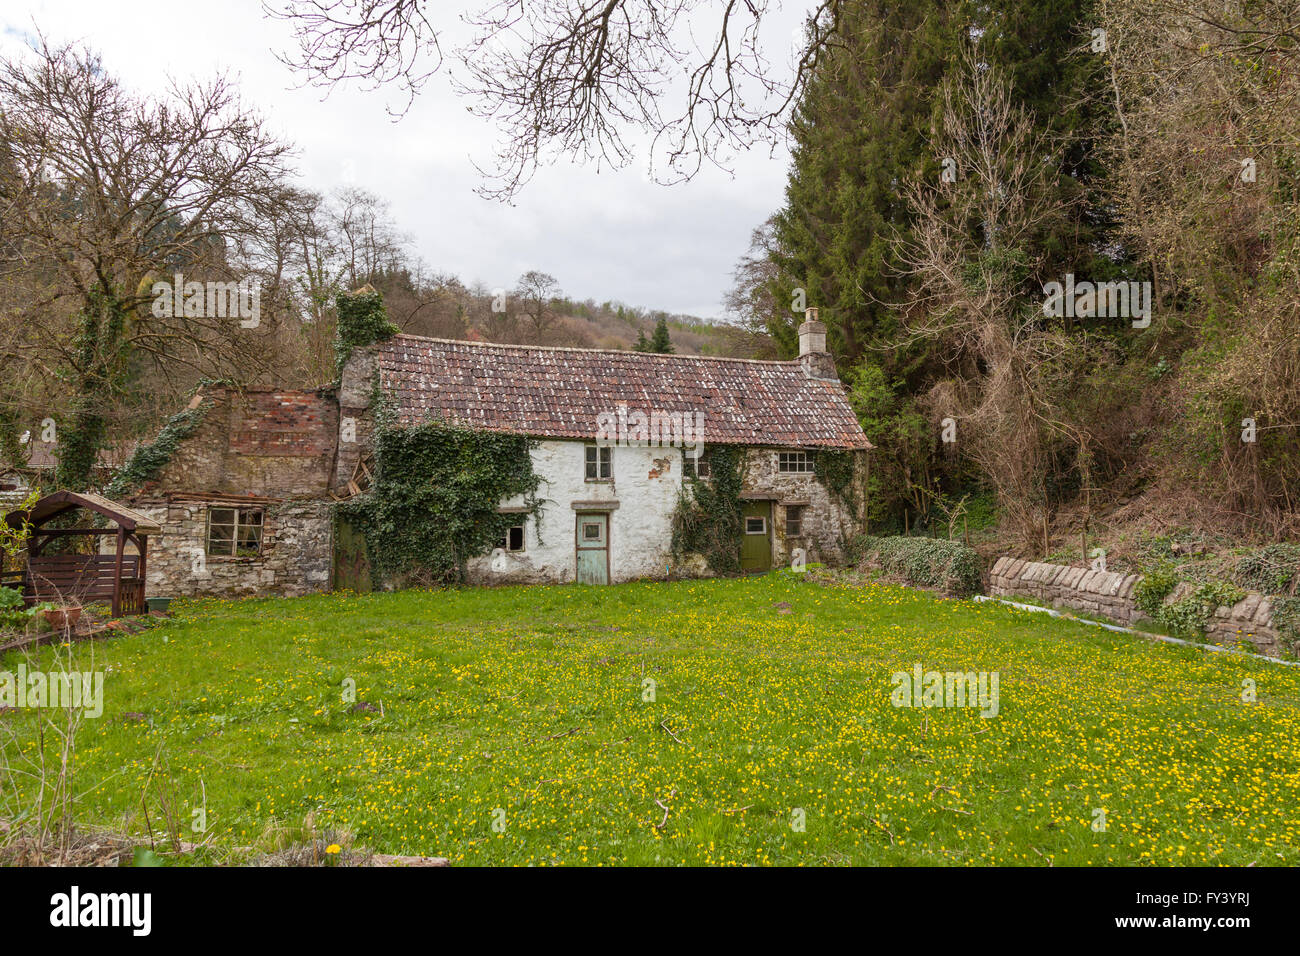 Abandoned cottage, Tintern, Monmouthshire, Wales. Stock Photo